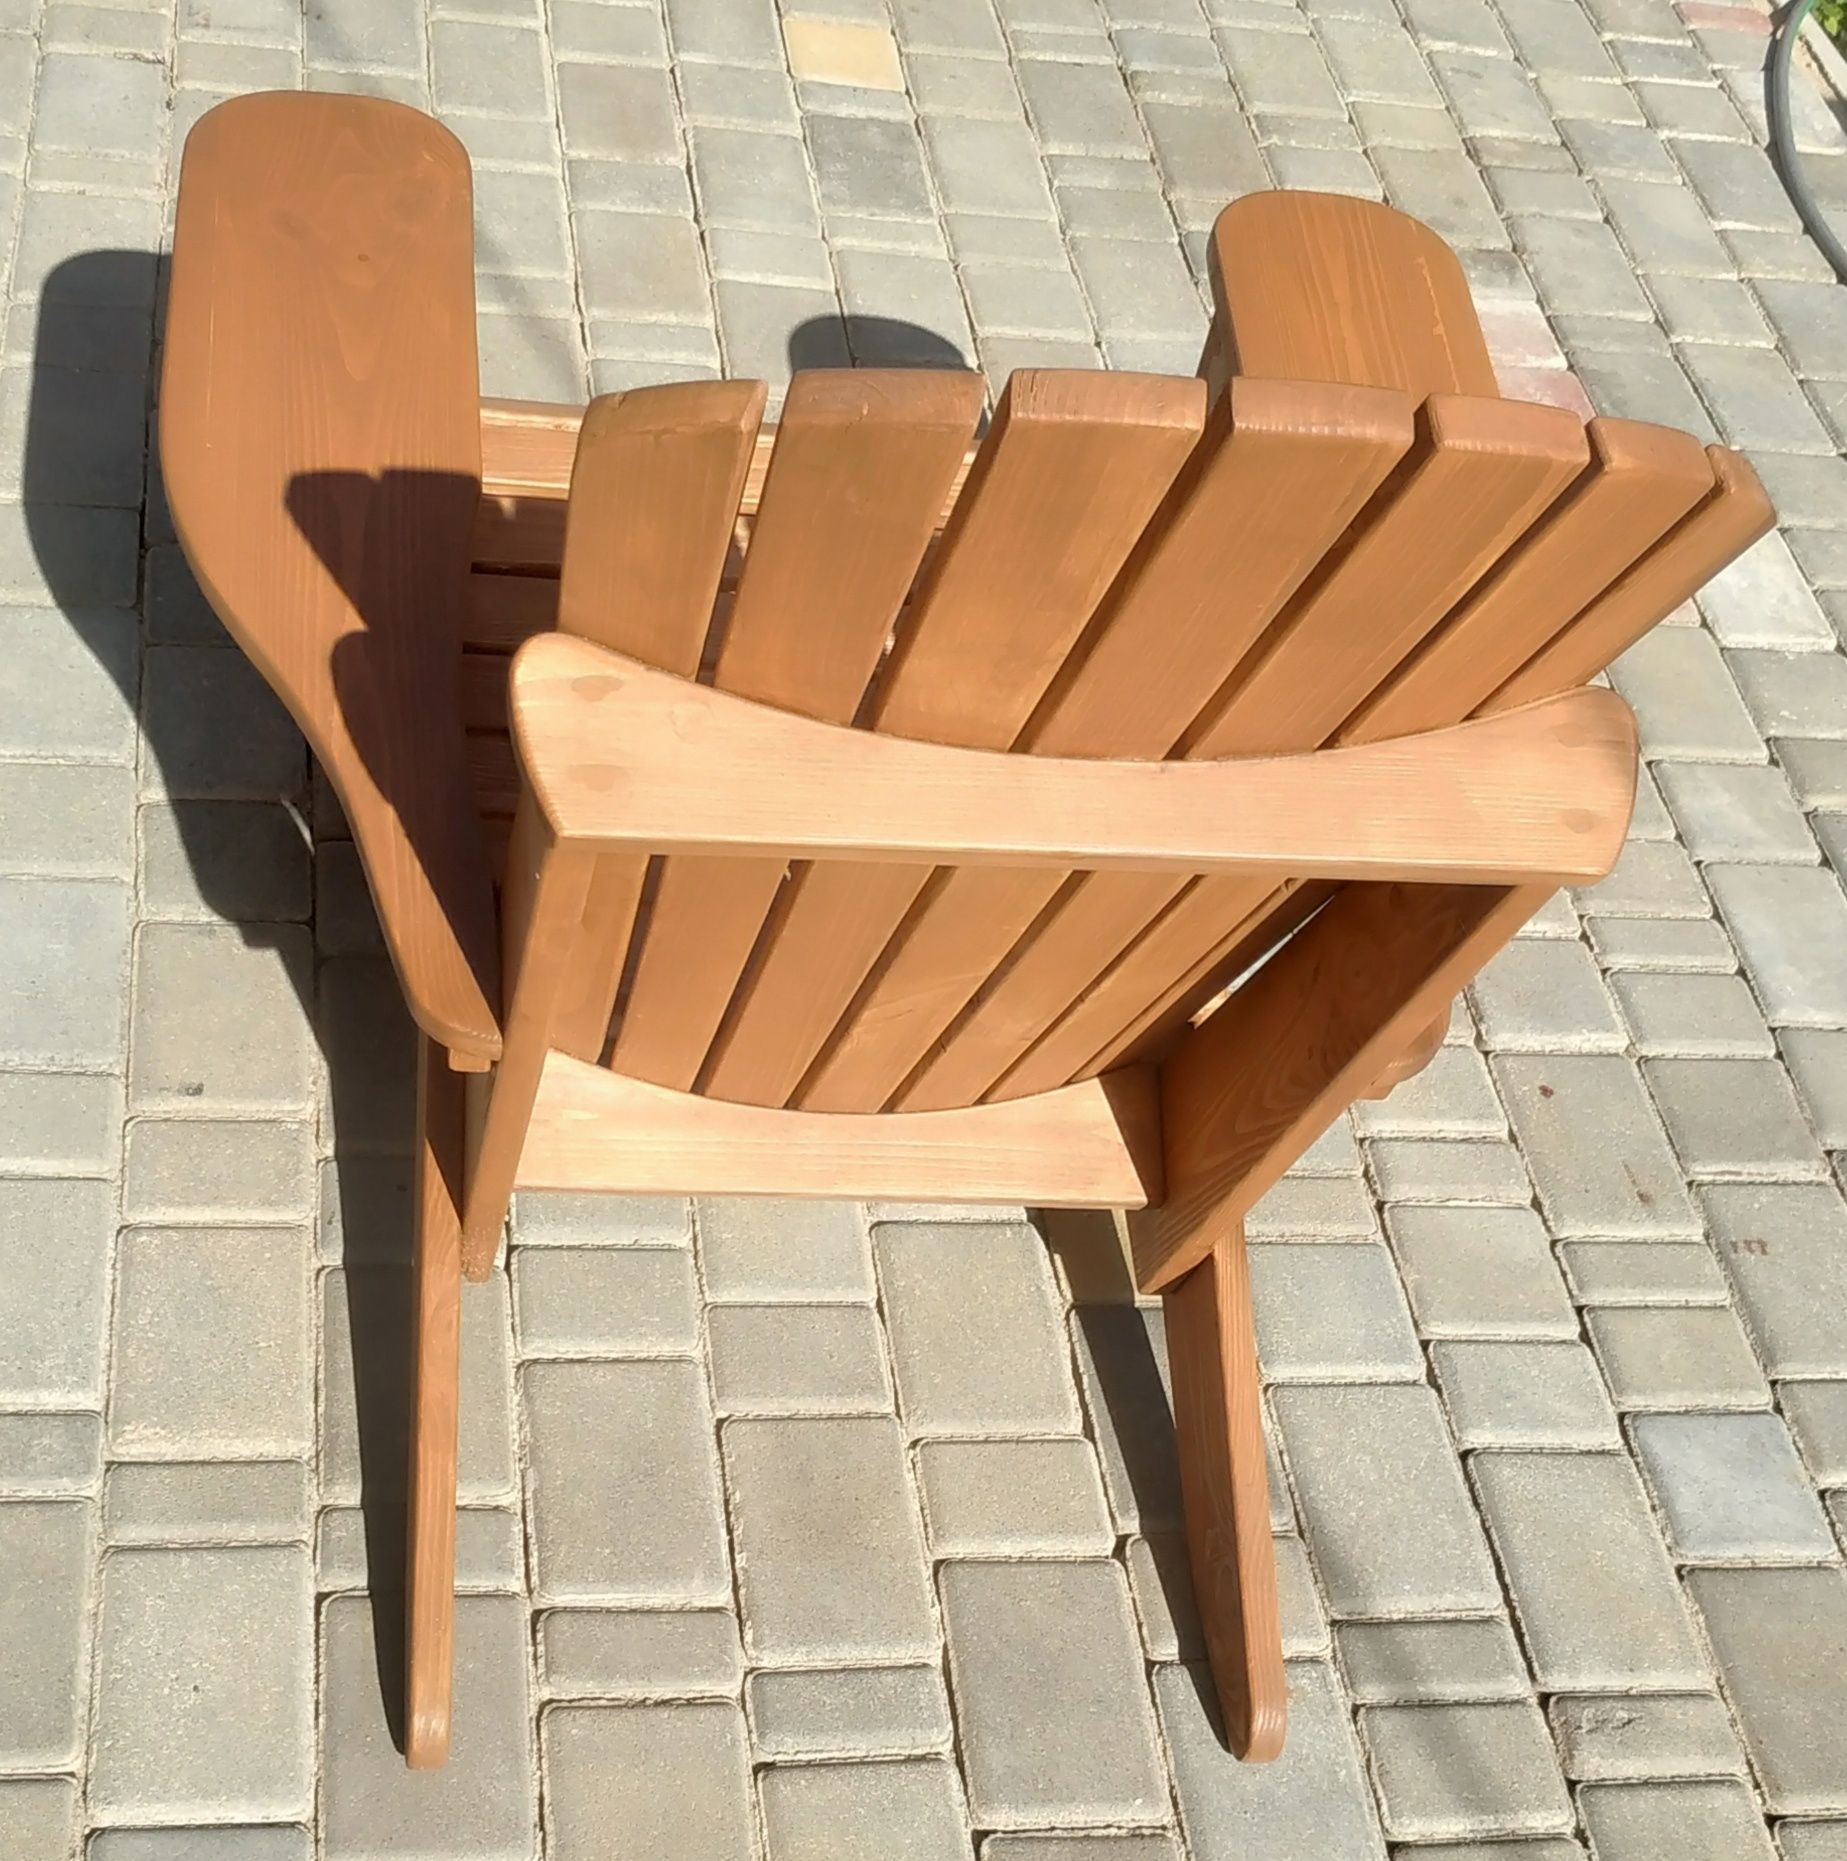 Адирондак - легендарное садовое кресло.